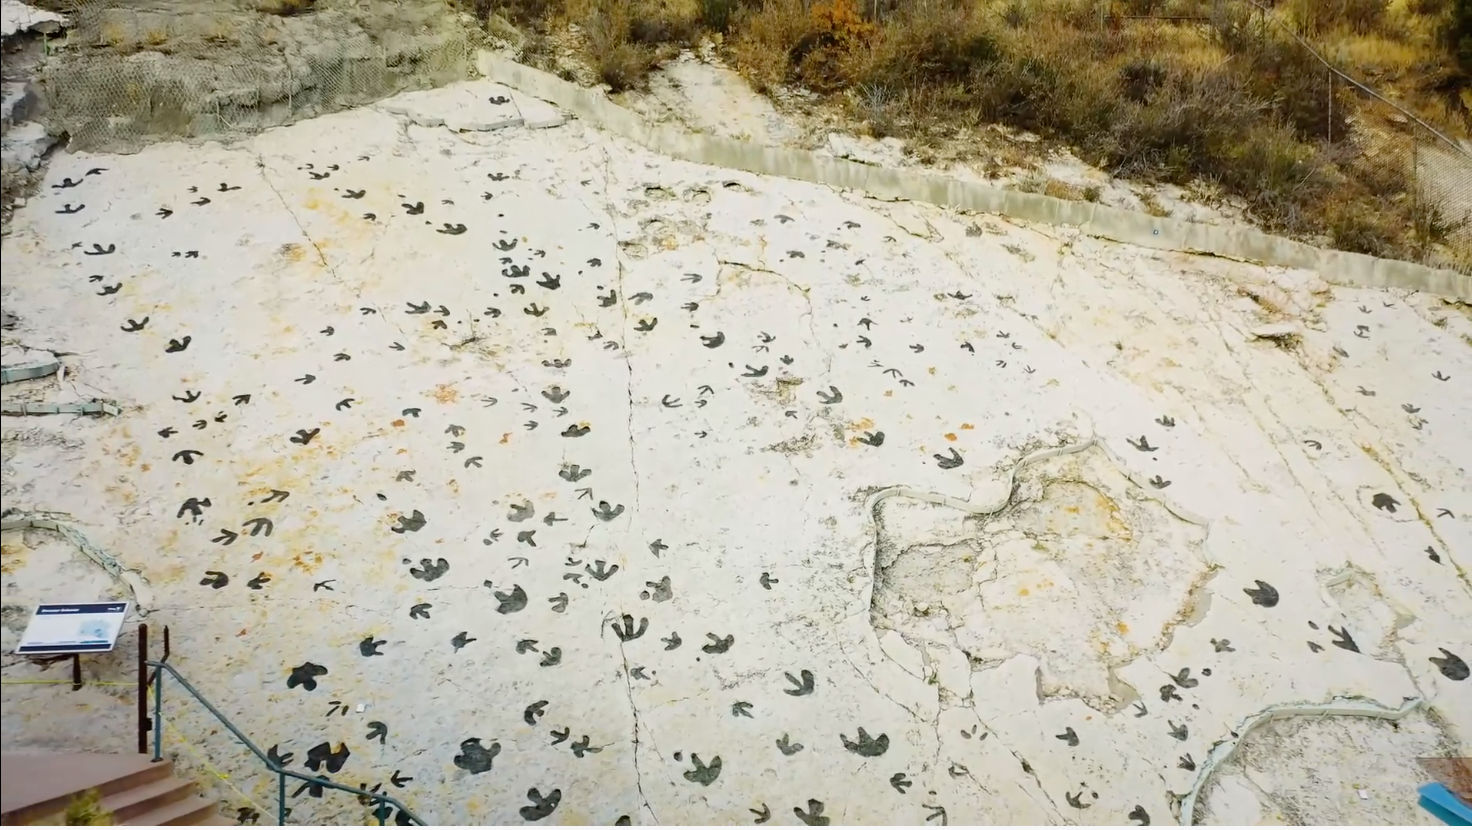 Dinosaur tracks embedded in a white rock.